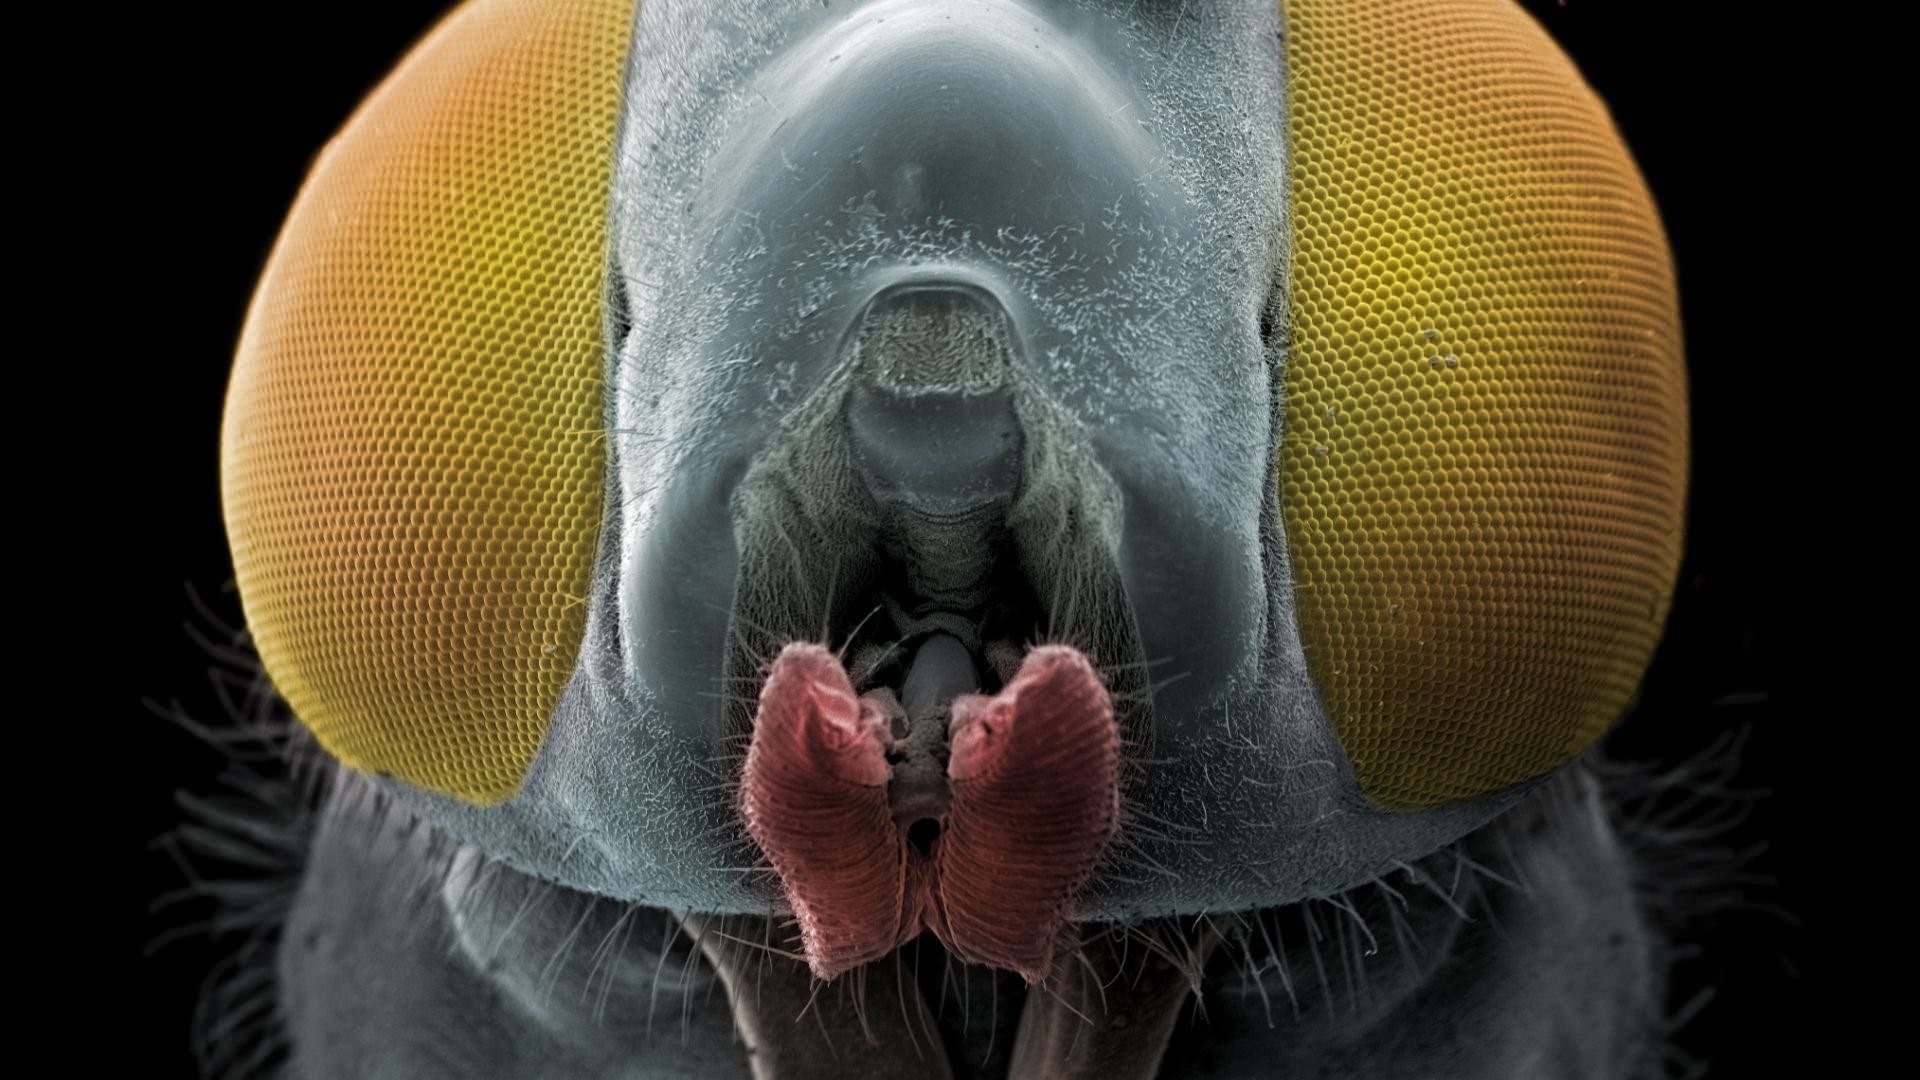 Бактерии на мухе. Астраханская мошка под микроскопом. Северная мошка под микроскопом. Астраханская мошкара под микроскопом. Микромир Муха под микроскопом.